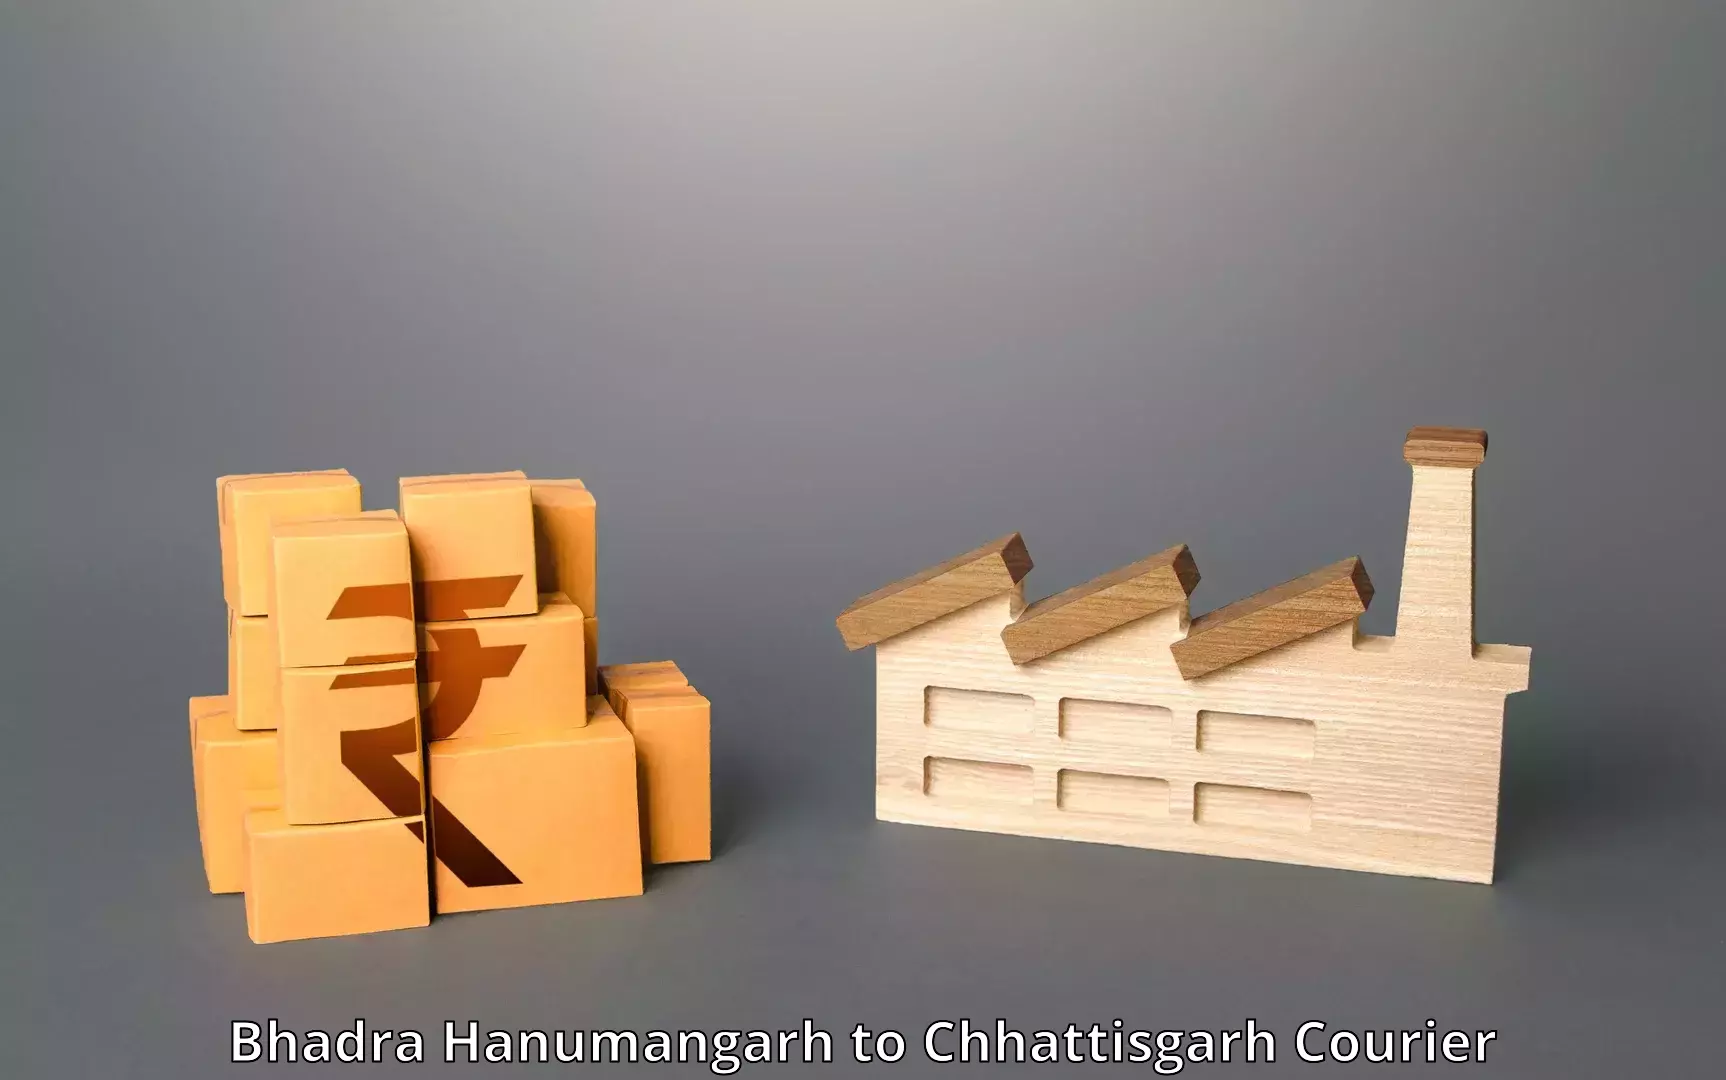 High-performance logistics Bhadra Hanumangarh to Patna Chhattisgarh